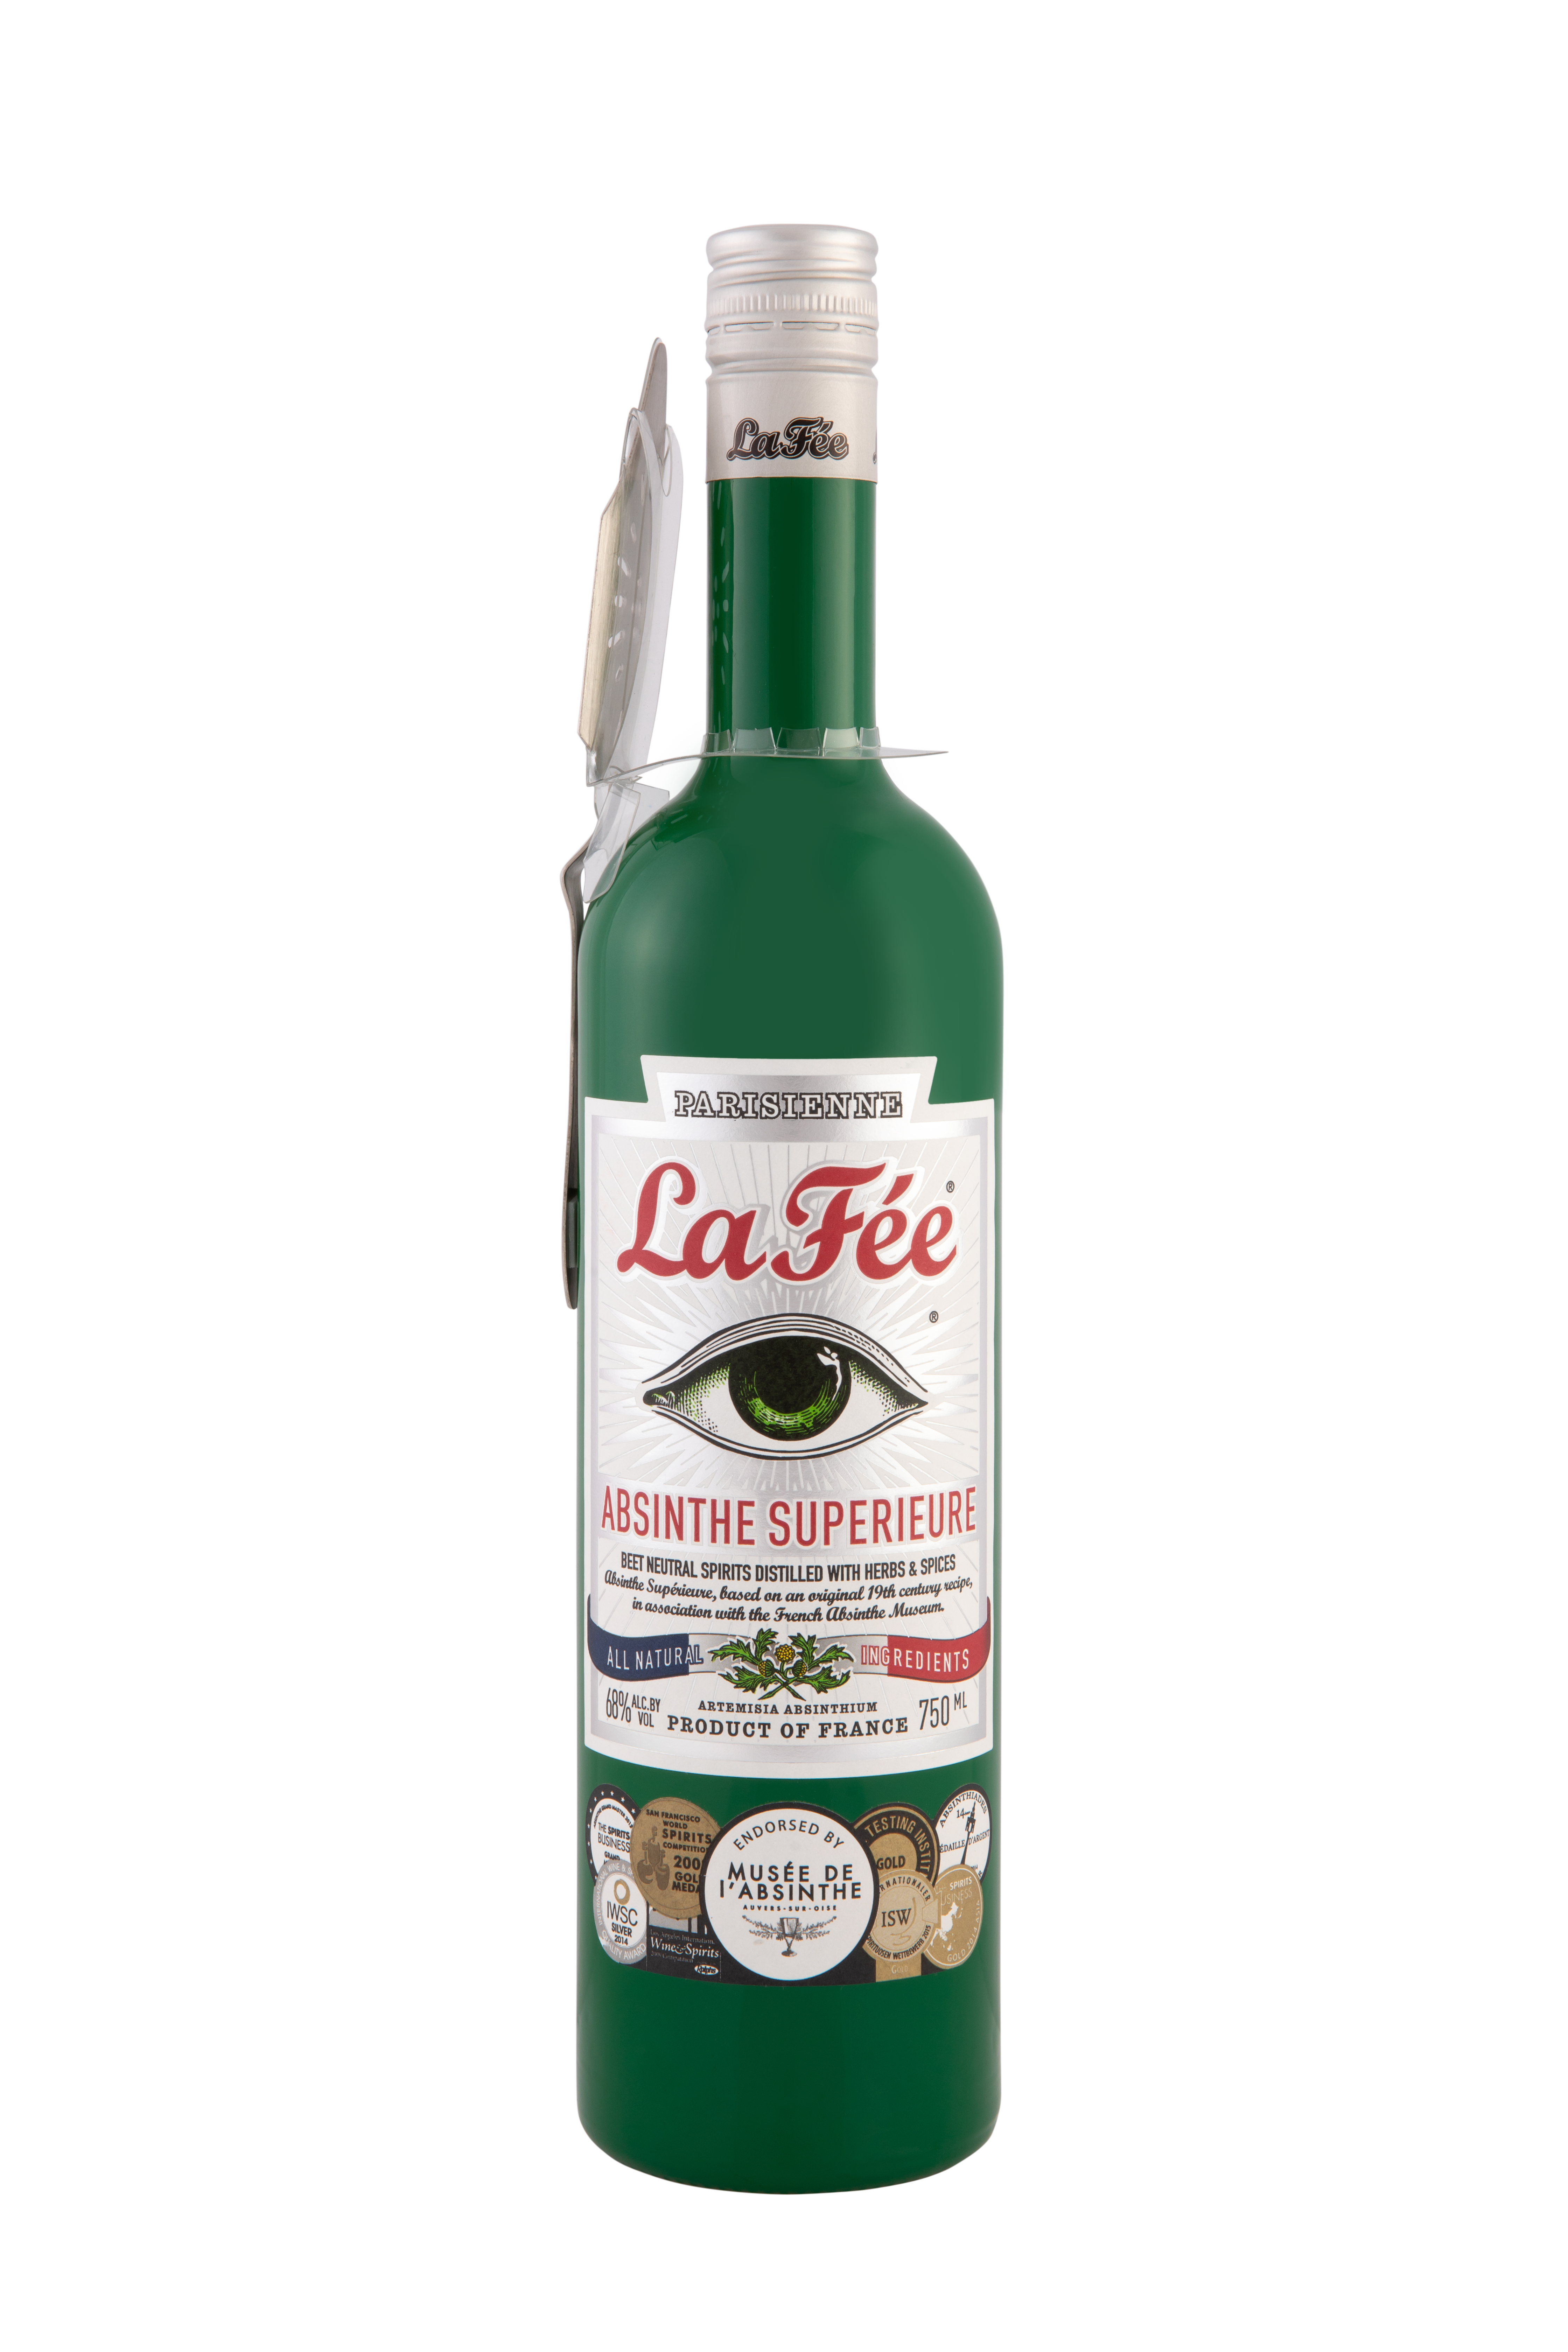 La Fee Absinthe Parisienne - 750ml Bottle